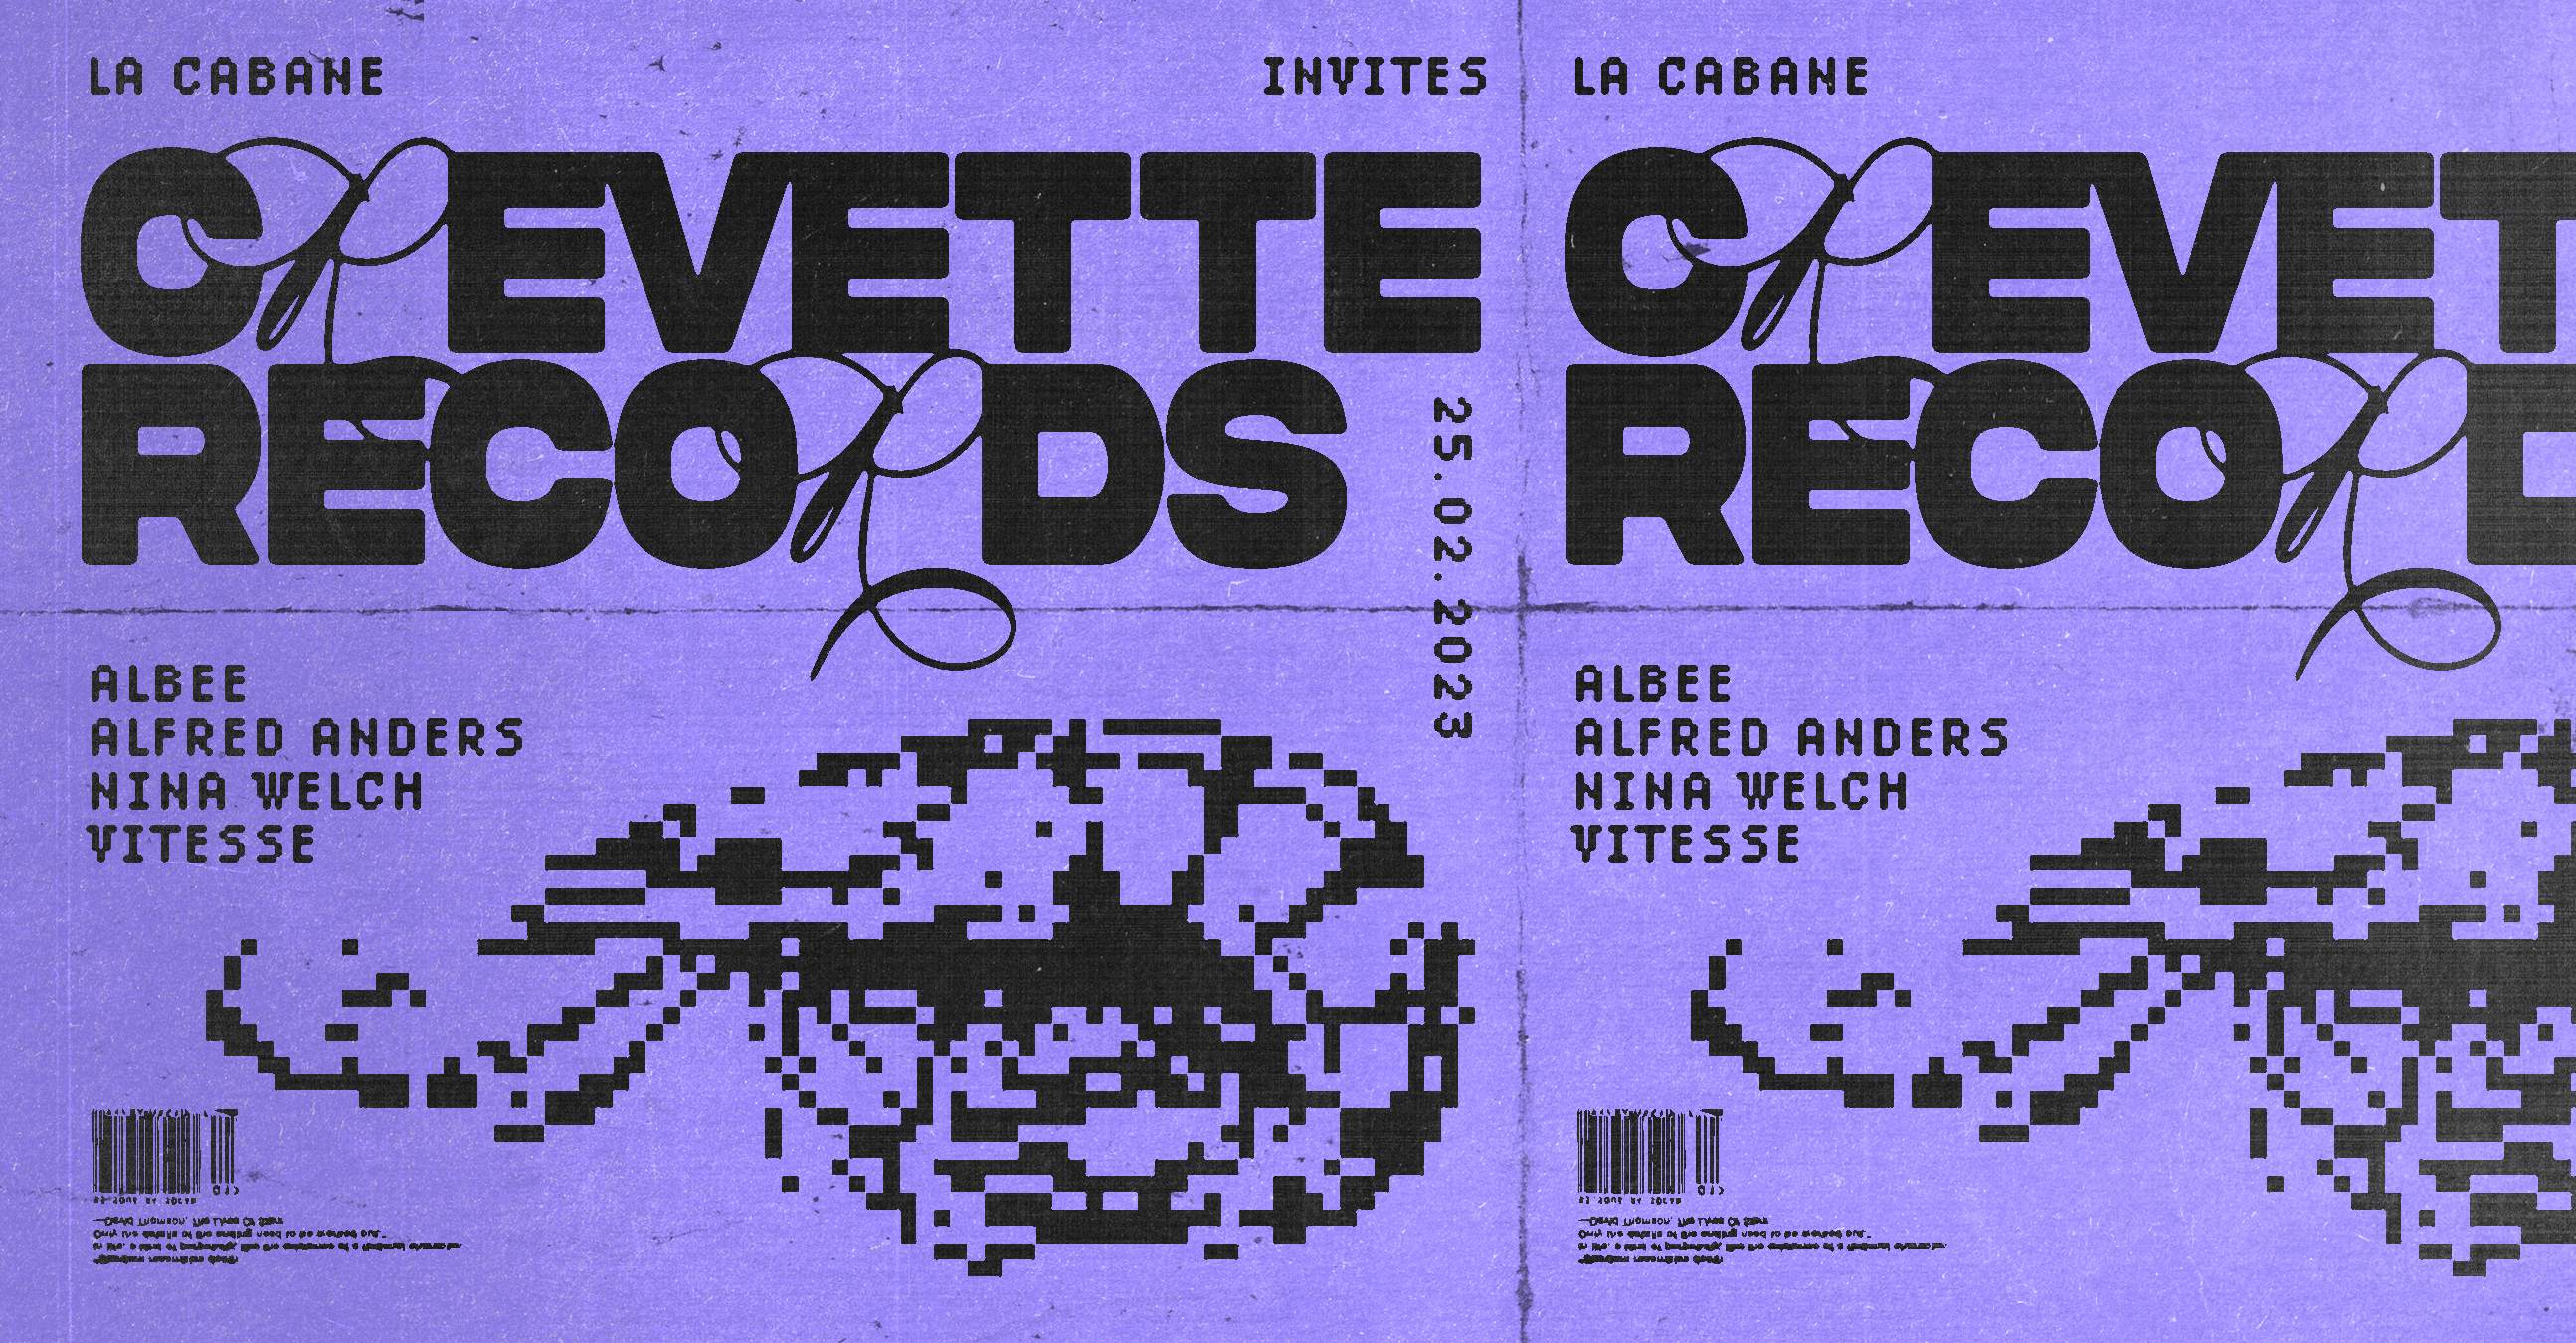 La Cabane - CREVETTE RECORDS • Albee, Alfred Anders, Nina Welch, Vitesse - フライヤー表